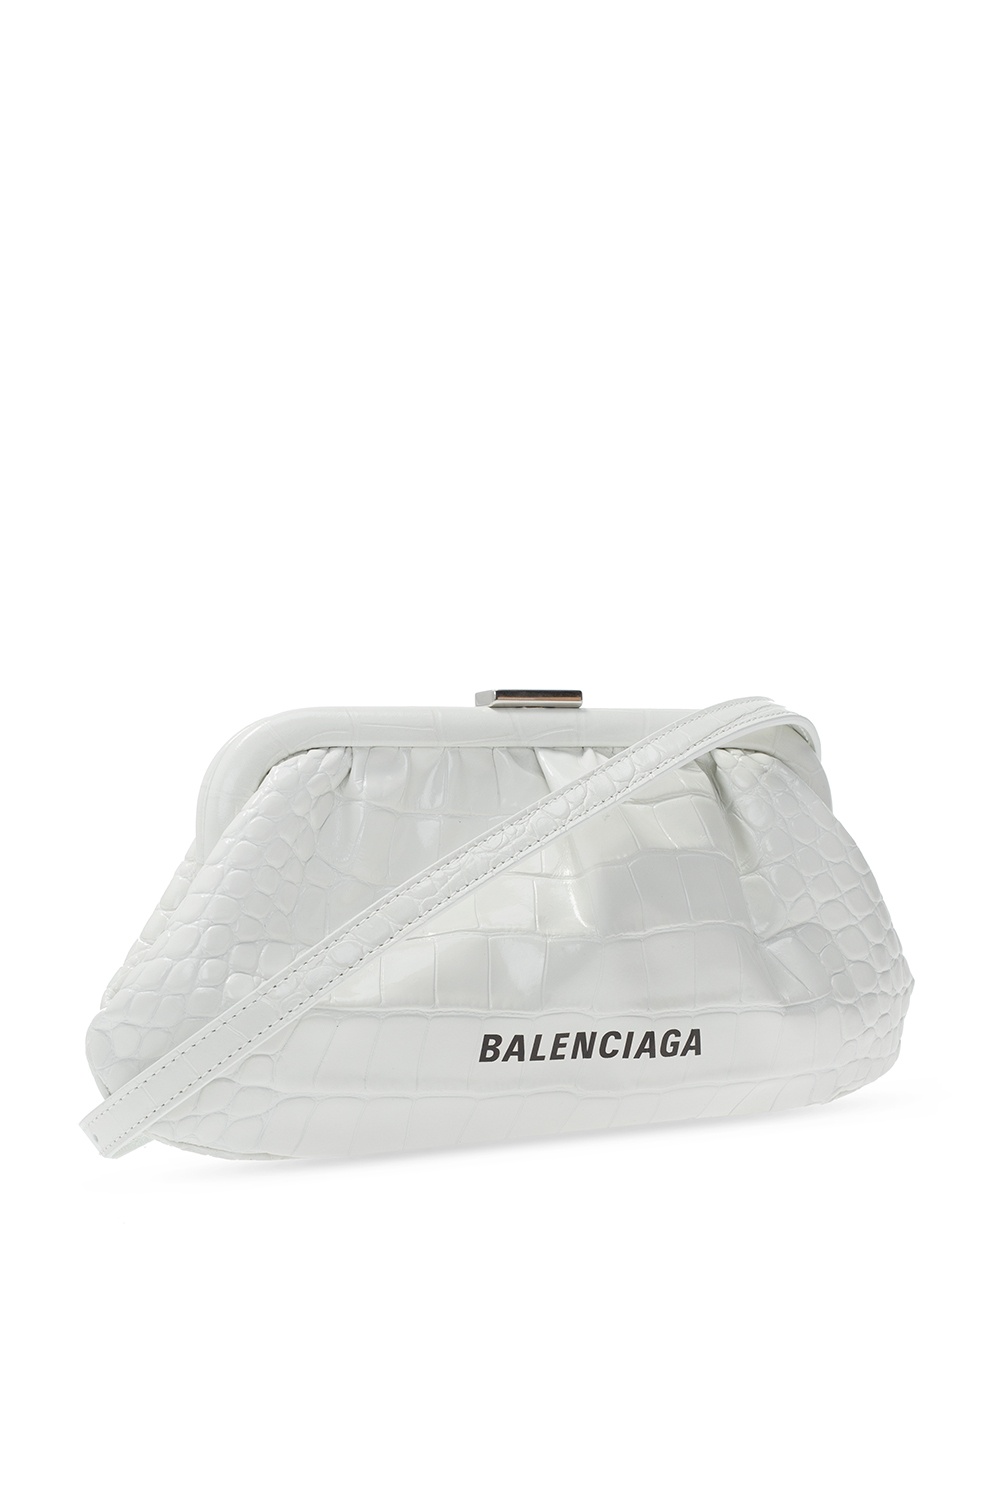 Balenciaga the north face back to berkley backpacks